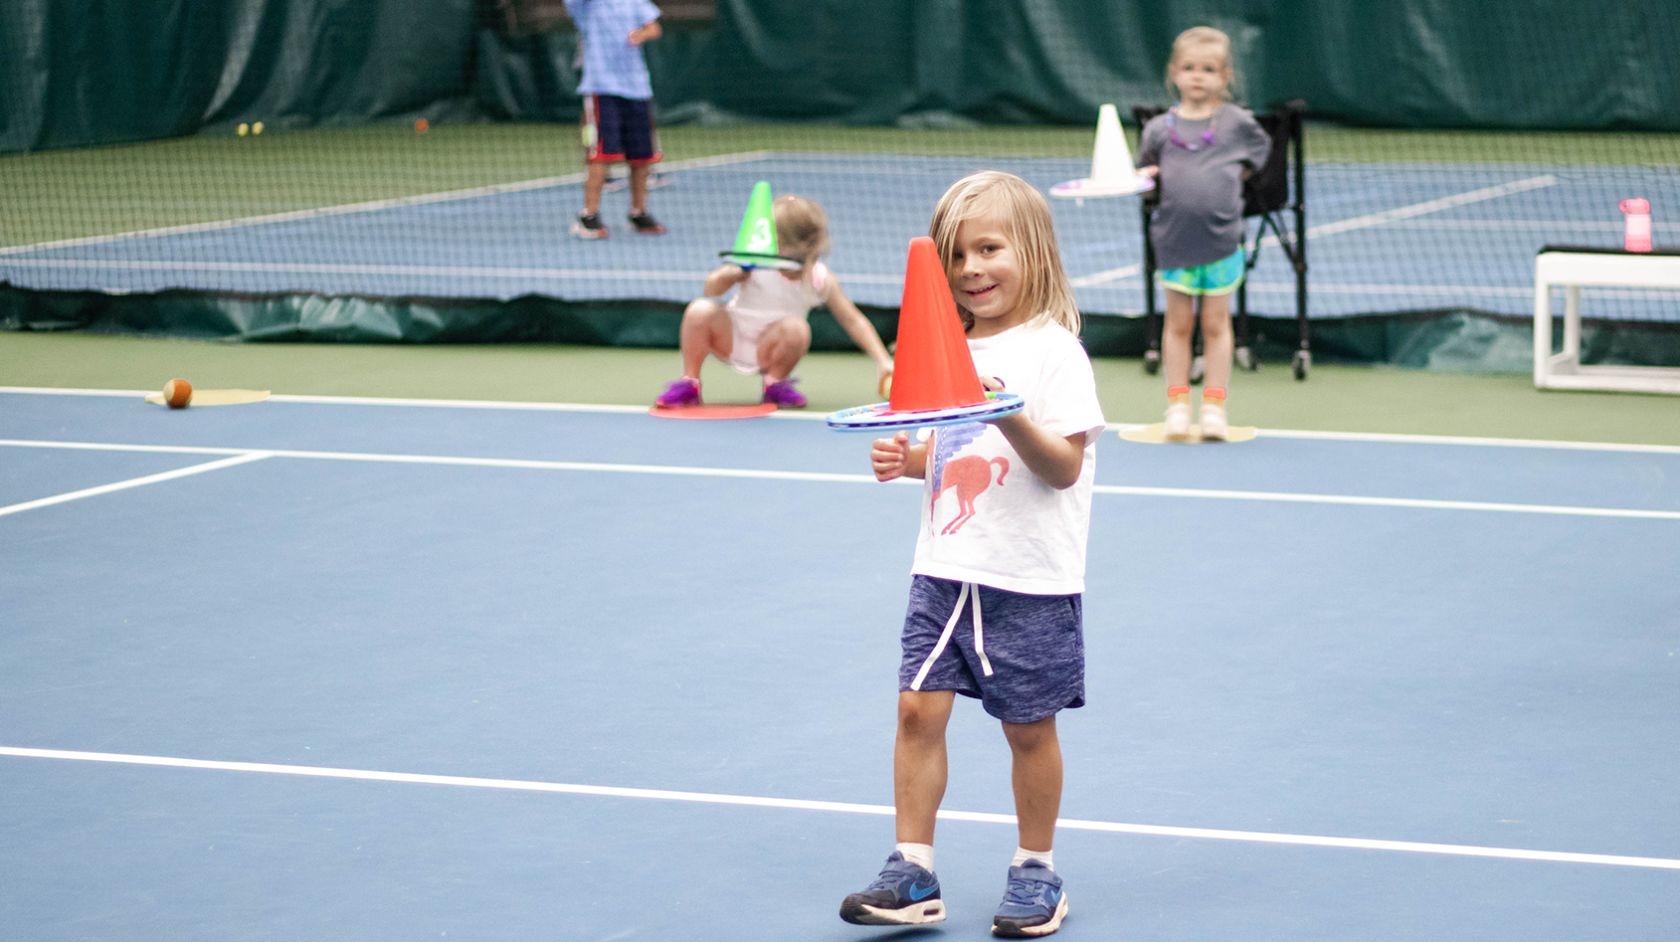 A Girl Holding A Tennis Racket